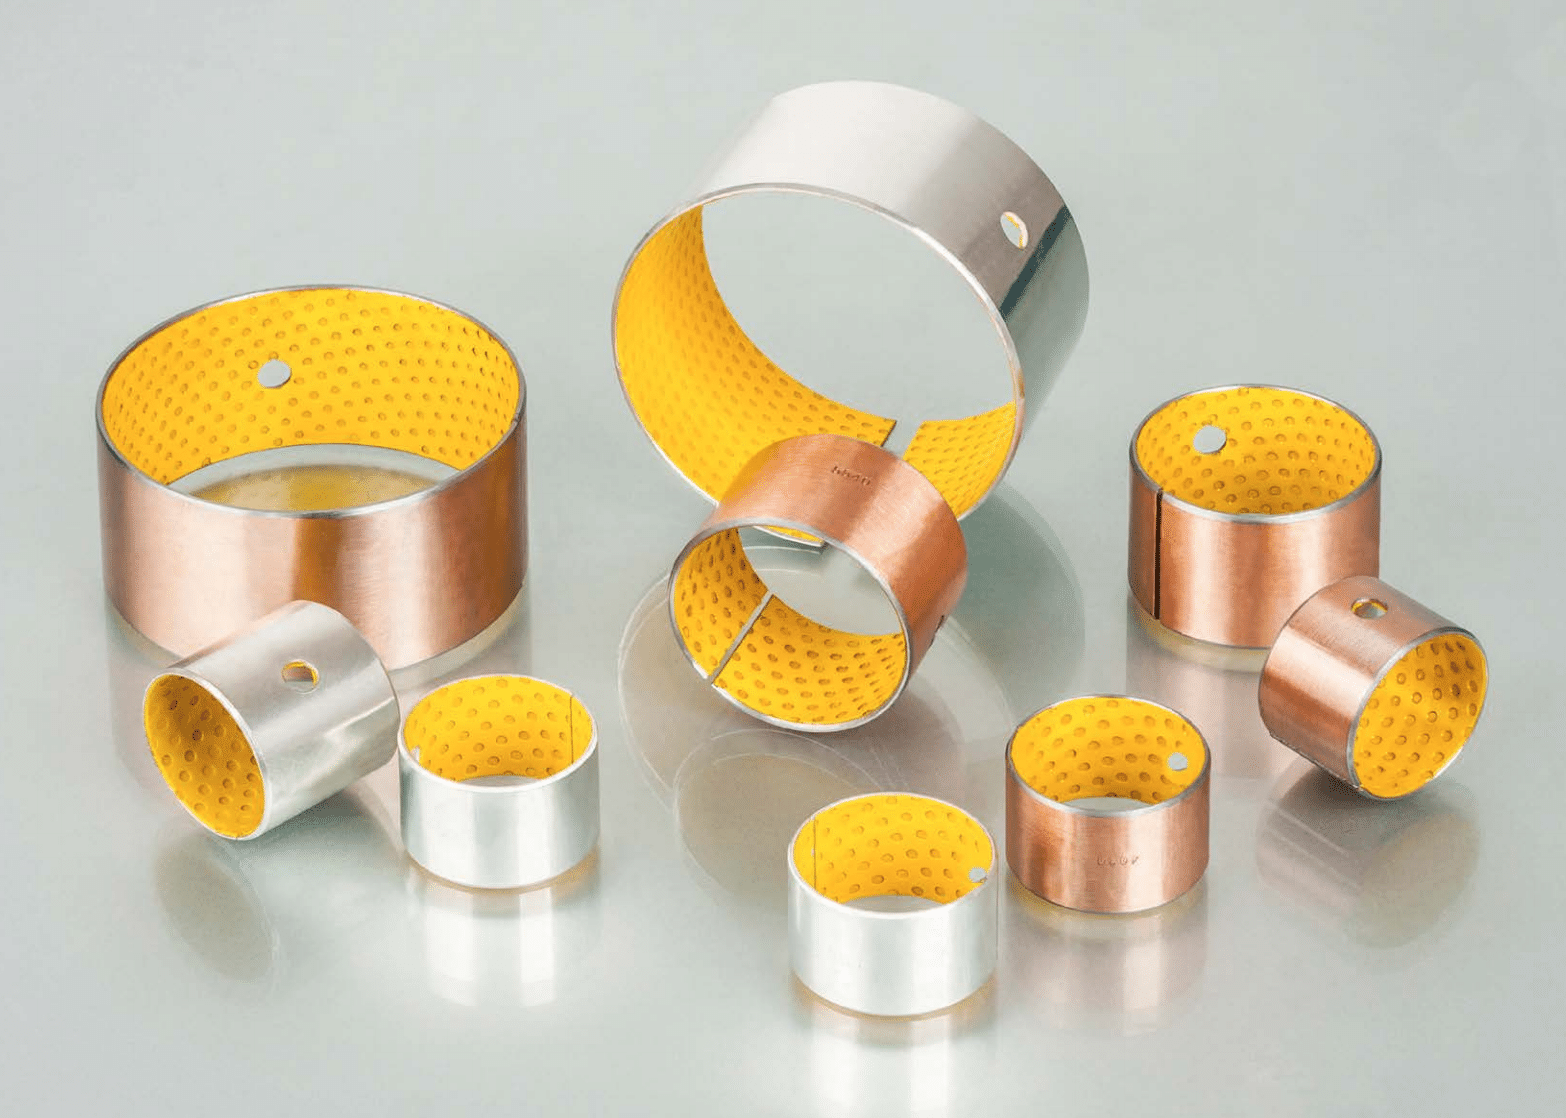 Metal-polymer composite bearings